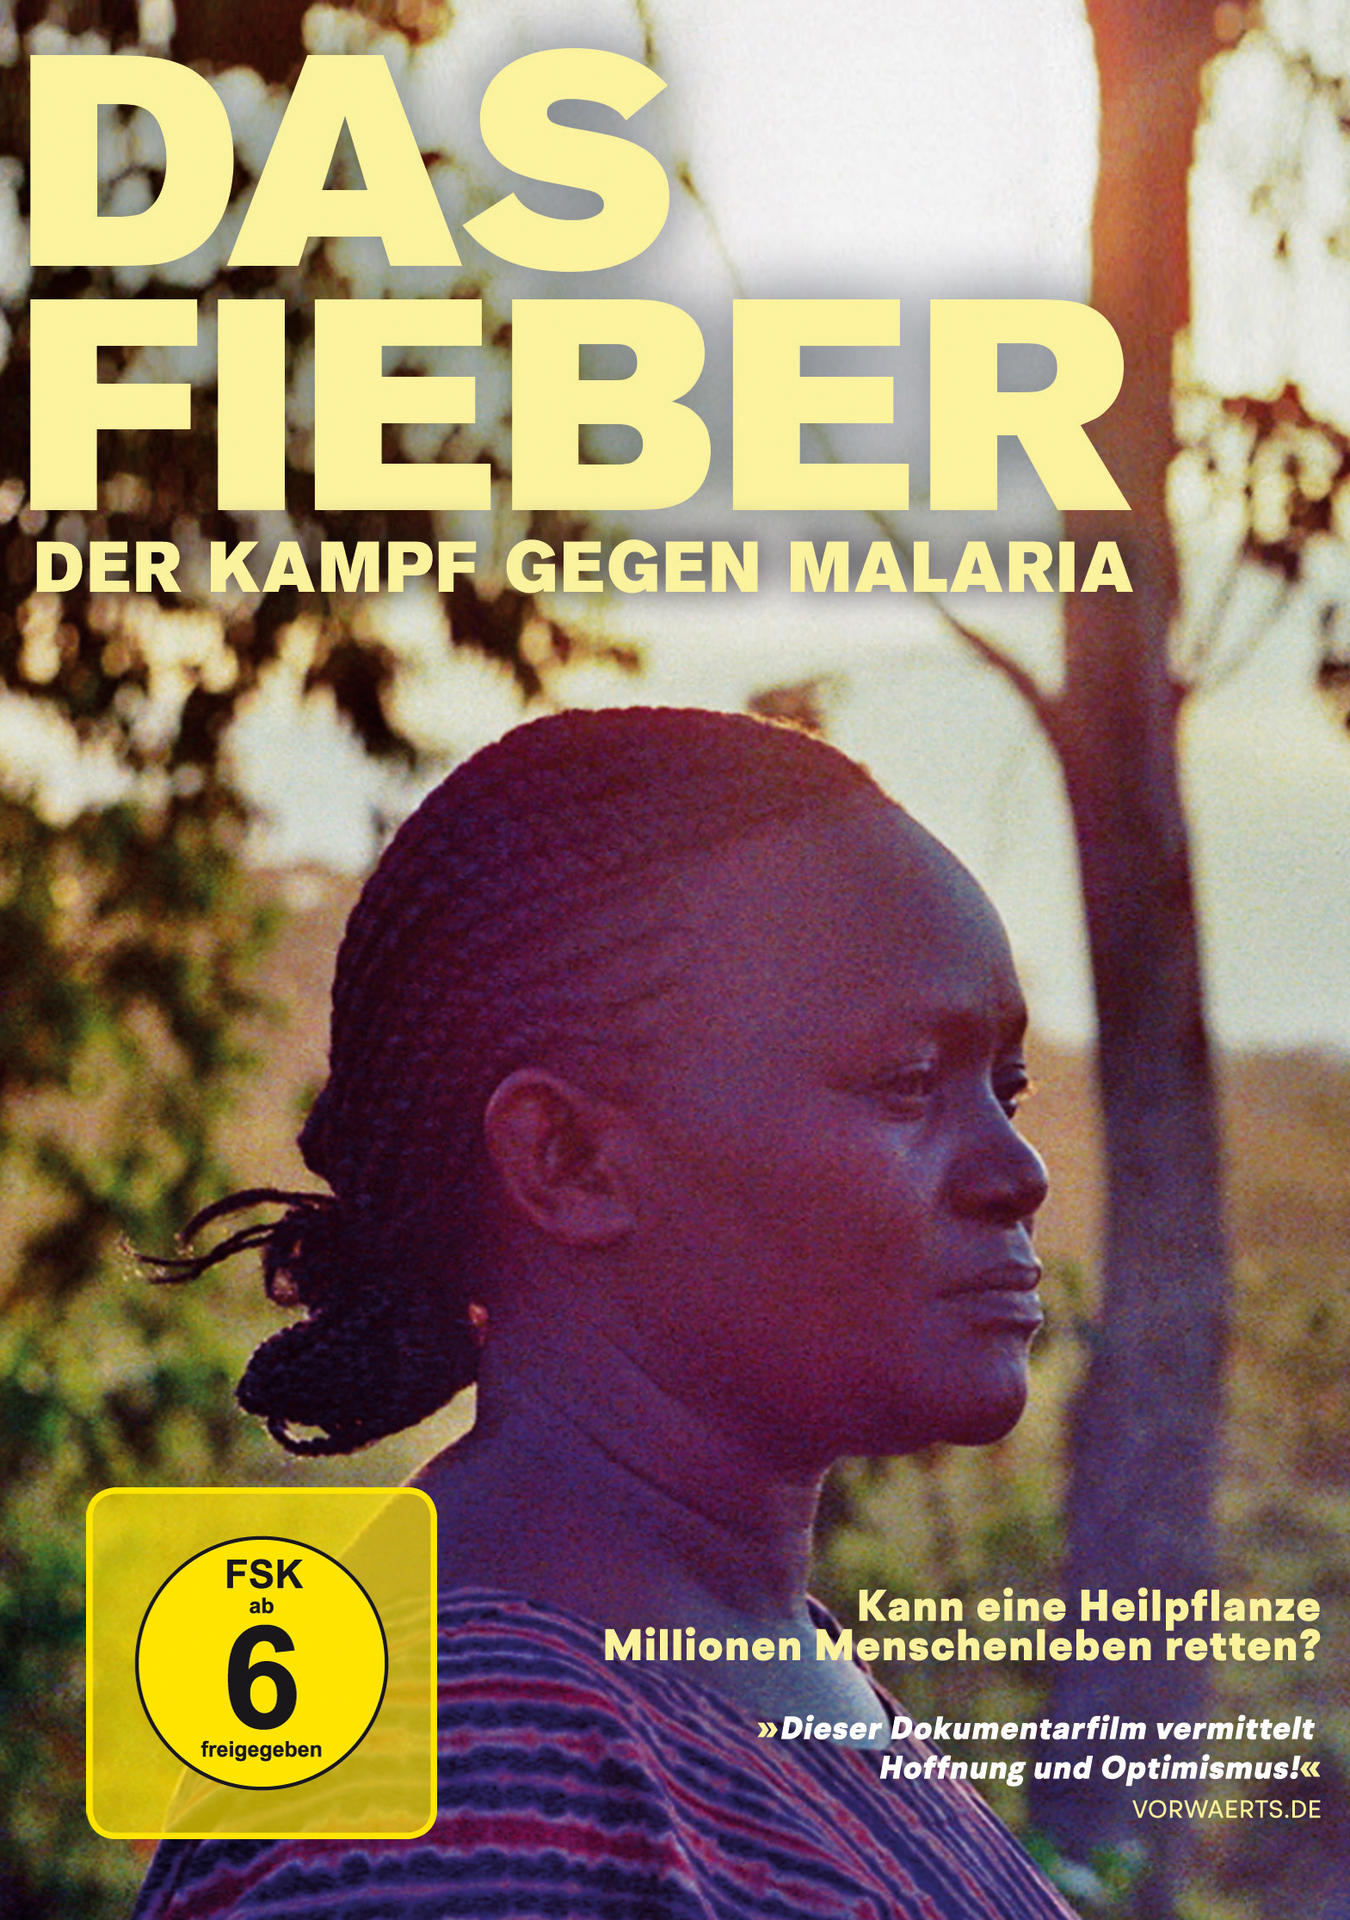 Das Fieber - Der DVD Malaria gegen Kampf